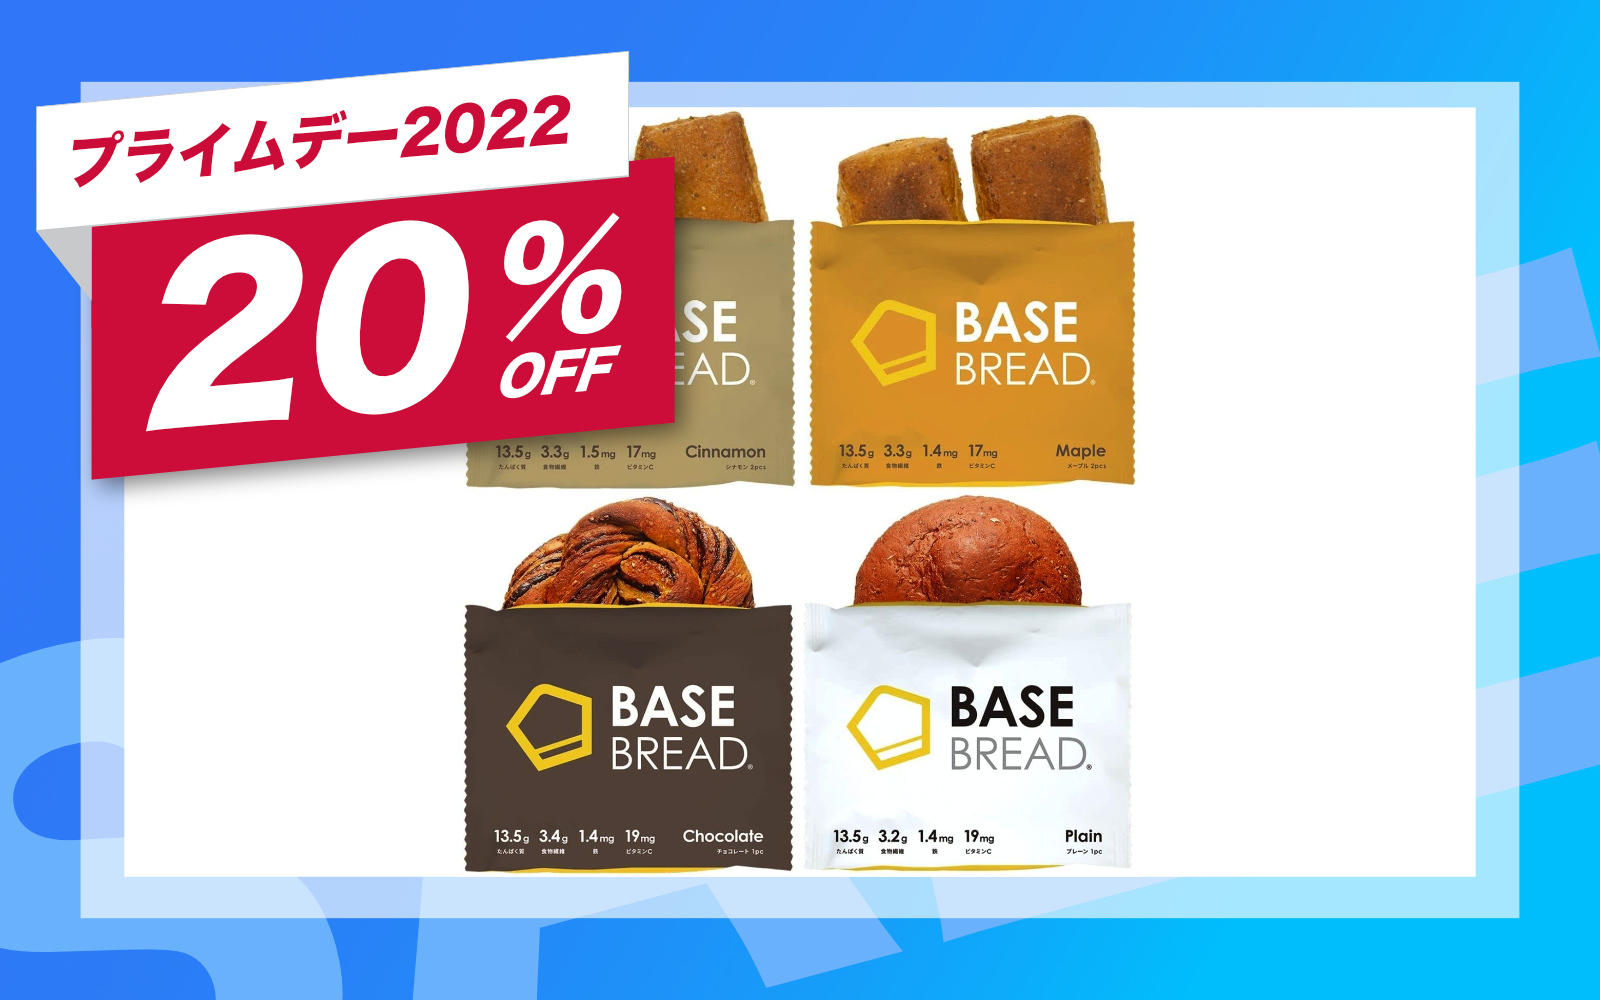 AmazonPrimeDay2022 Sale Item Base Bread